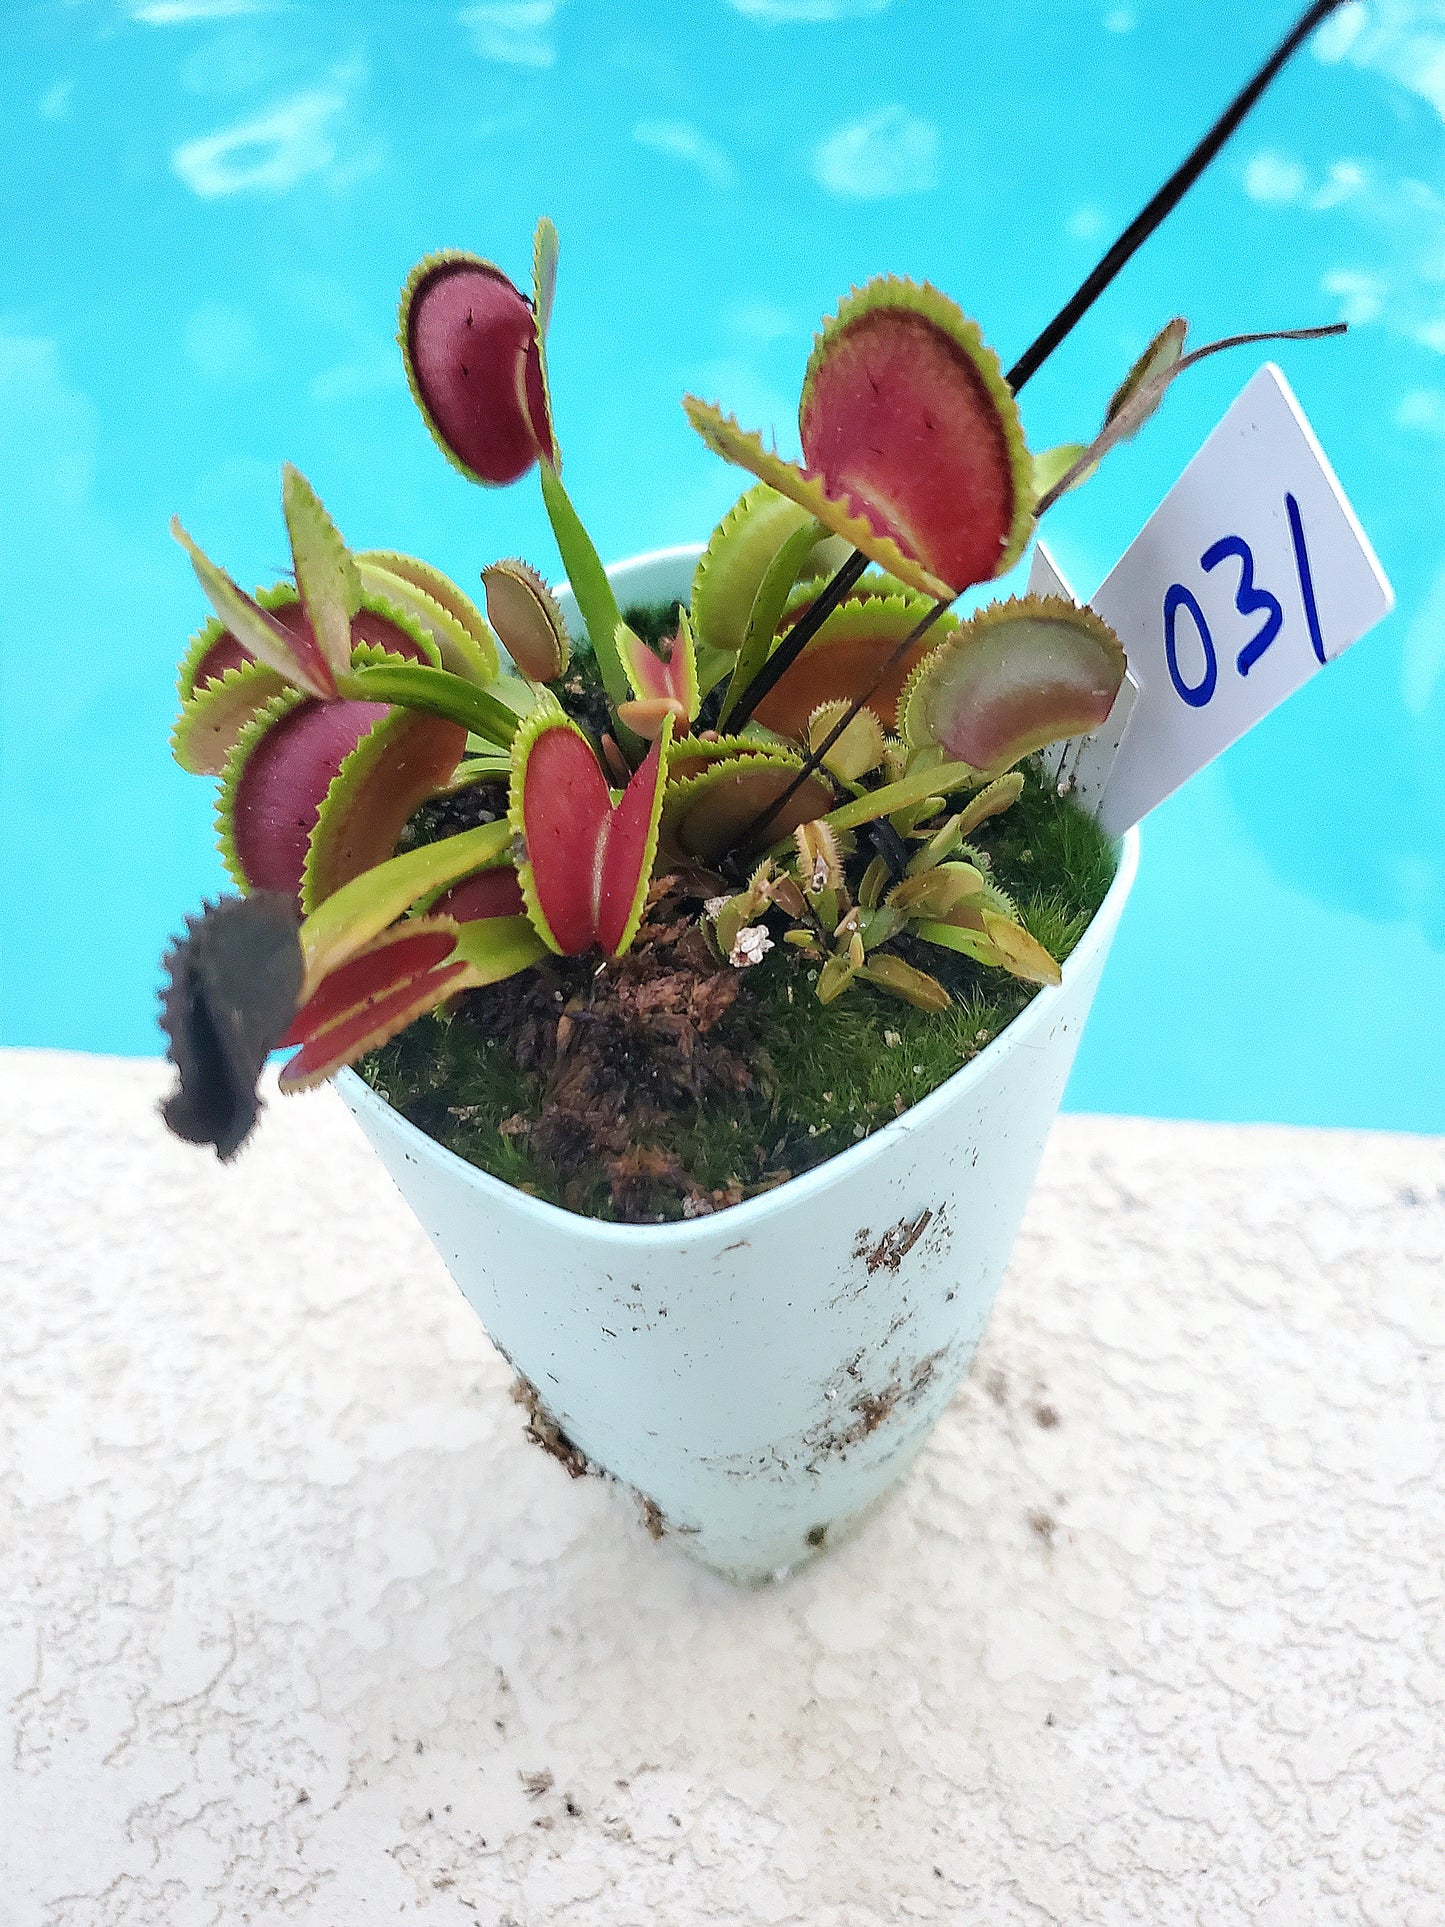 Get me that plant - 031 - Martha lips Venus Flytrap Carnivorous plant